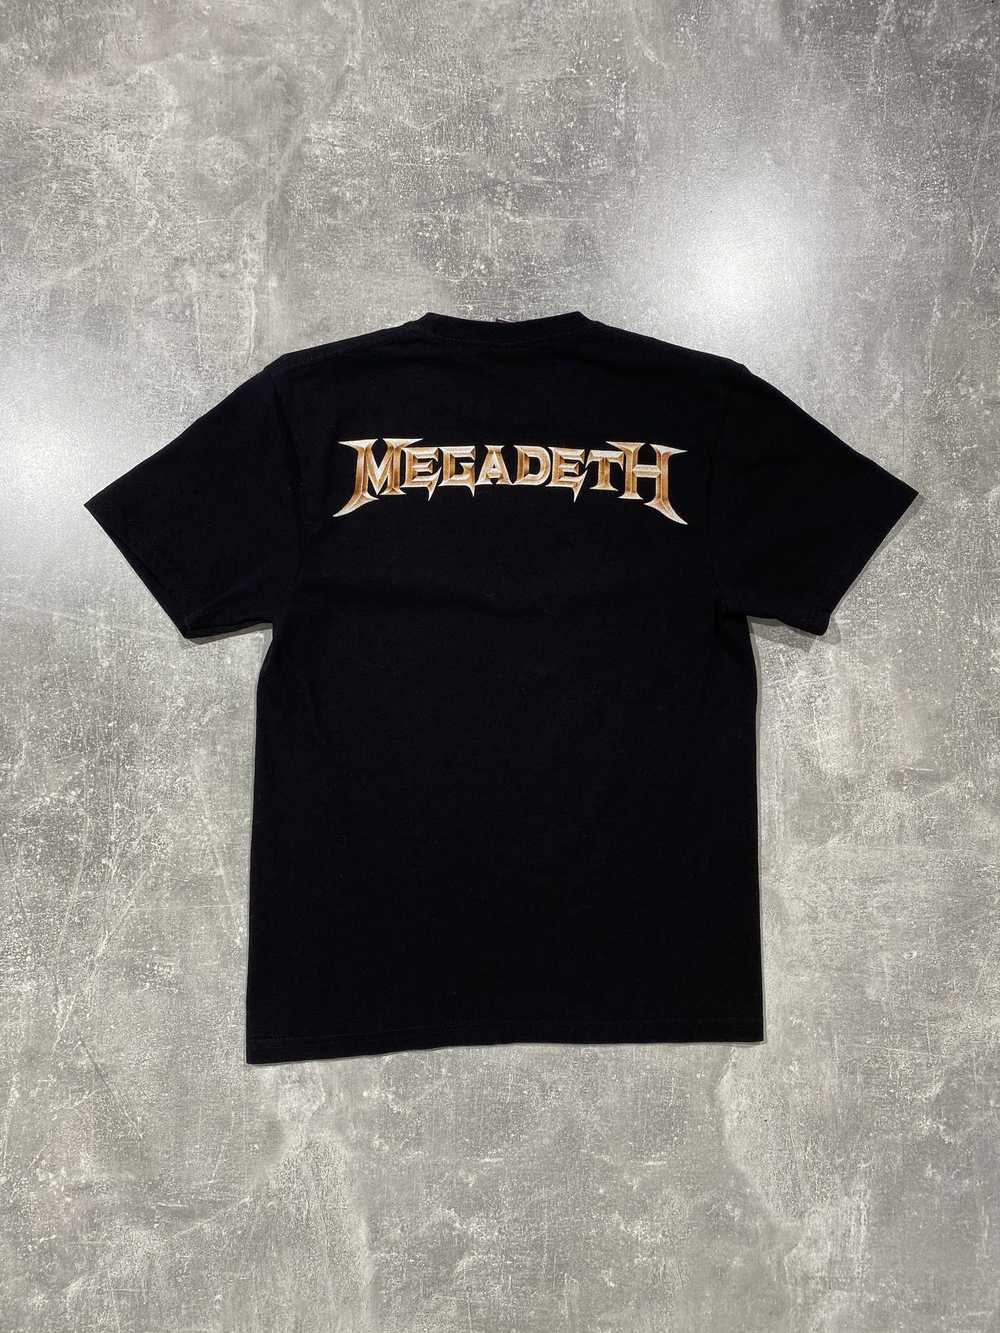 Band Tees × Megadeth × Rock T Shirt Megadeth skul… - image 3